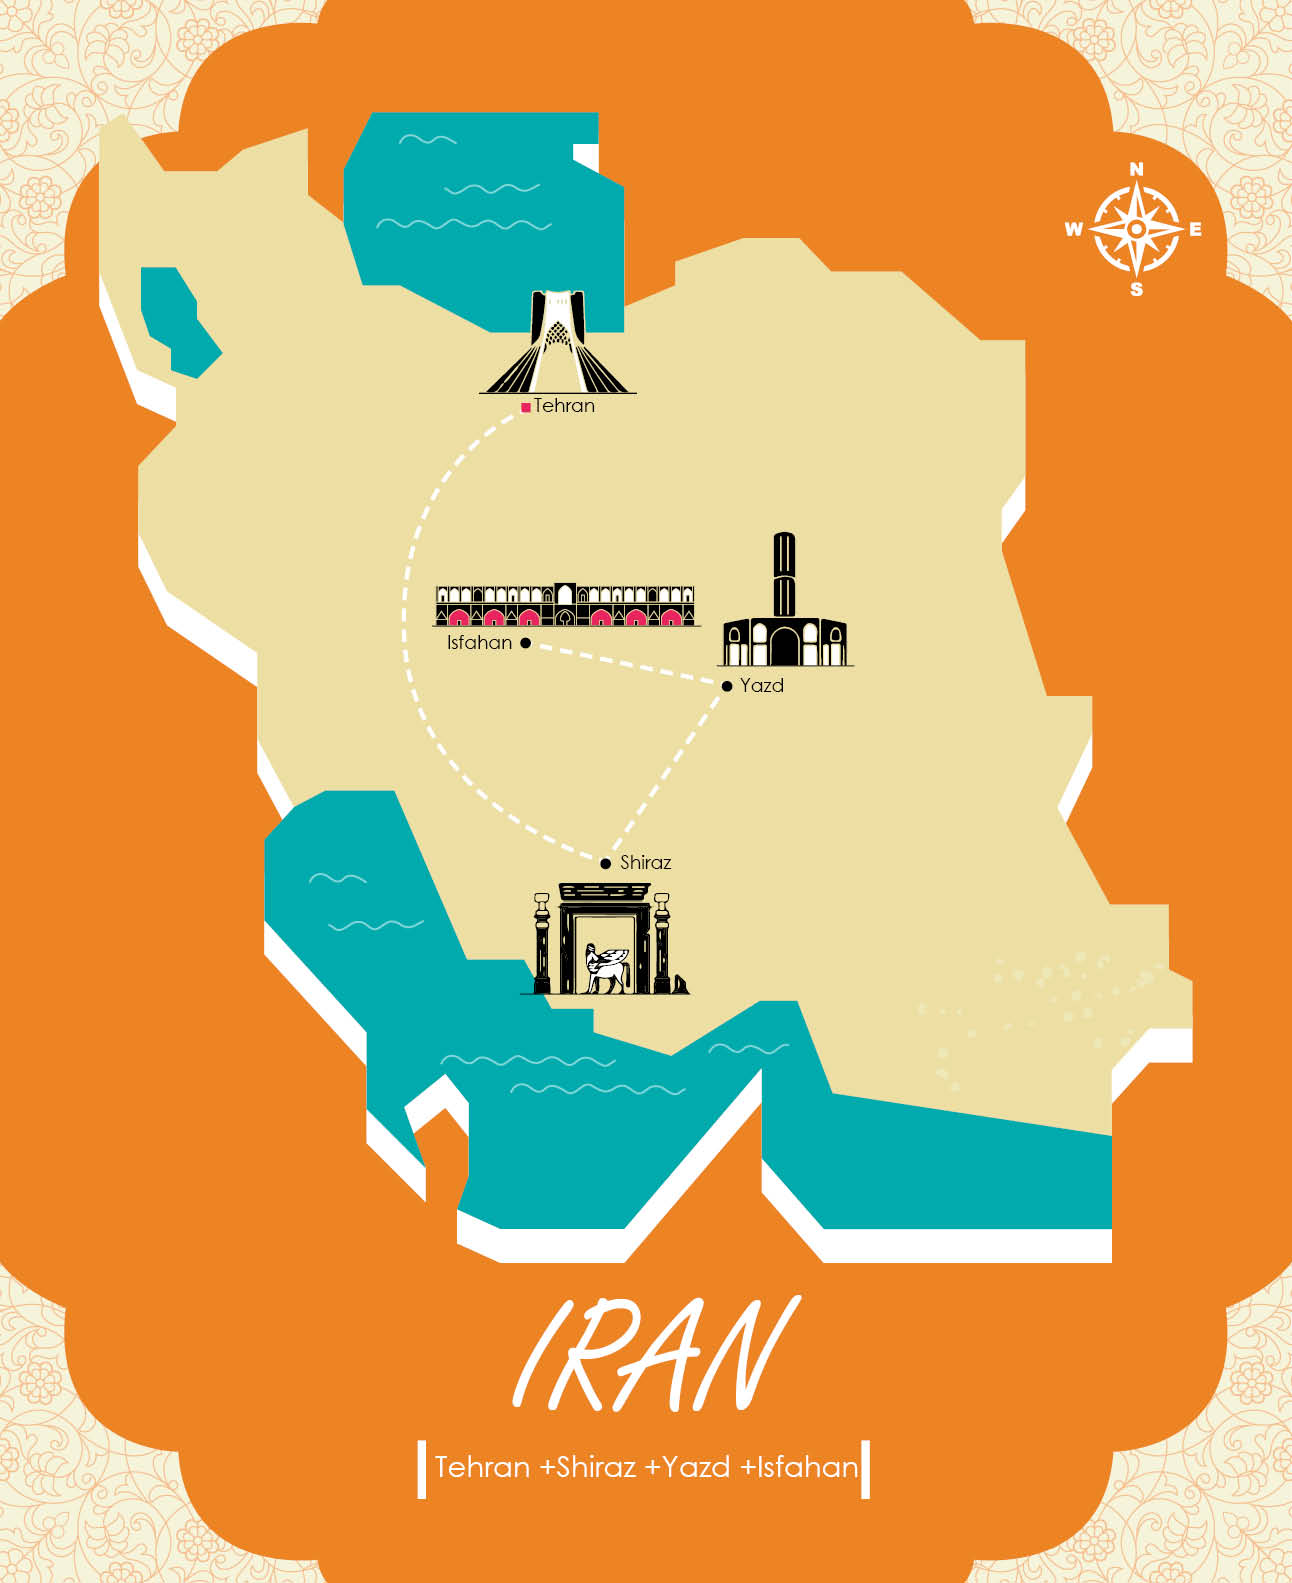 Tour to Iran: Mashhad, Shiraz, Isfahan, Tehran